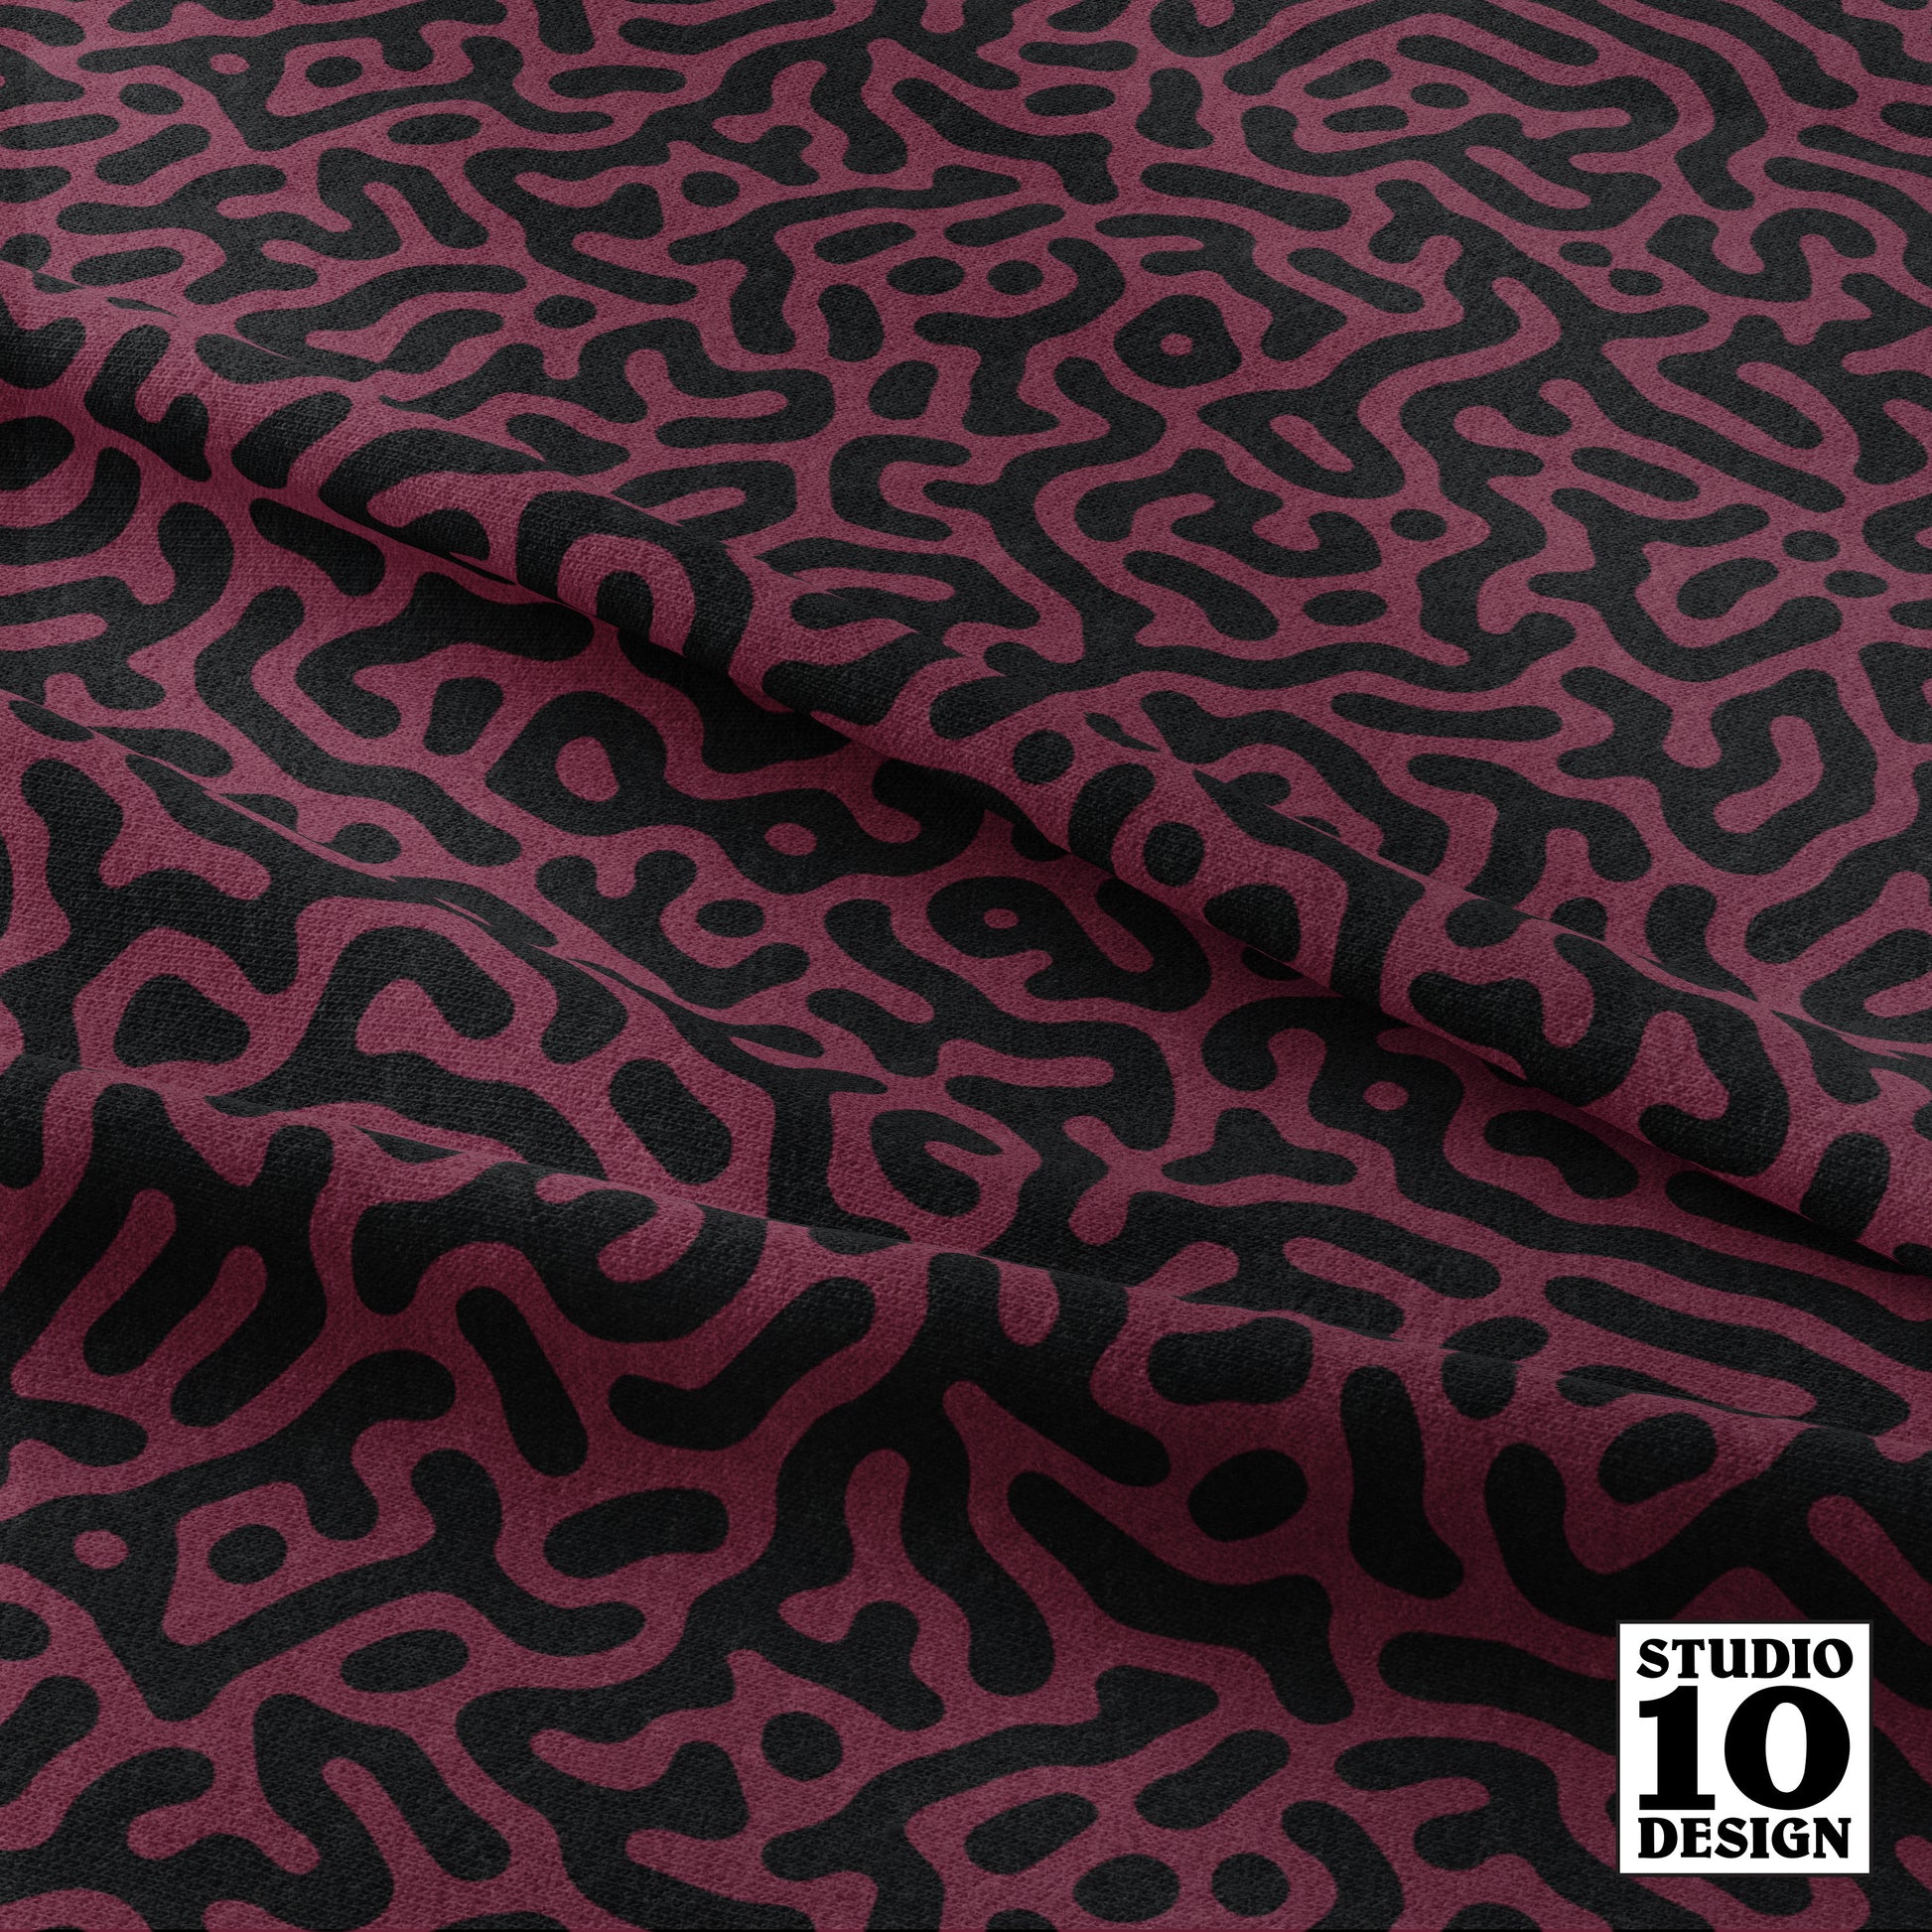 Turing Pattern I: Black + Wine Printed Fabric by Studio Ten Design